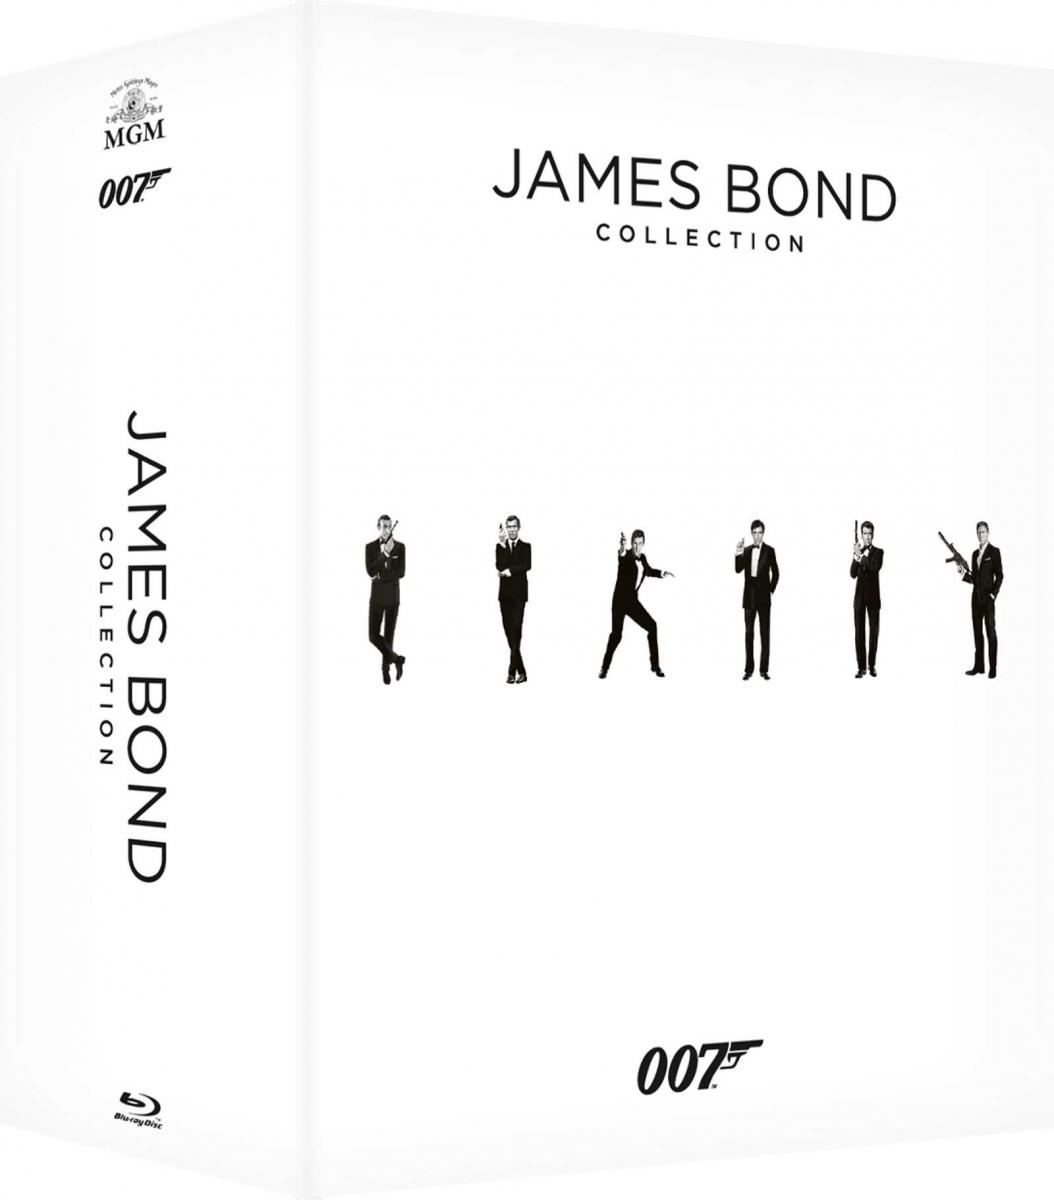 007 James Bond Complete Collection